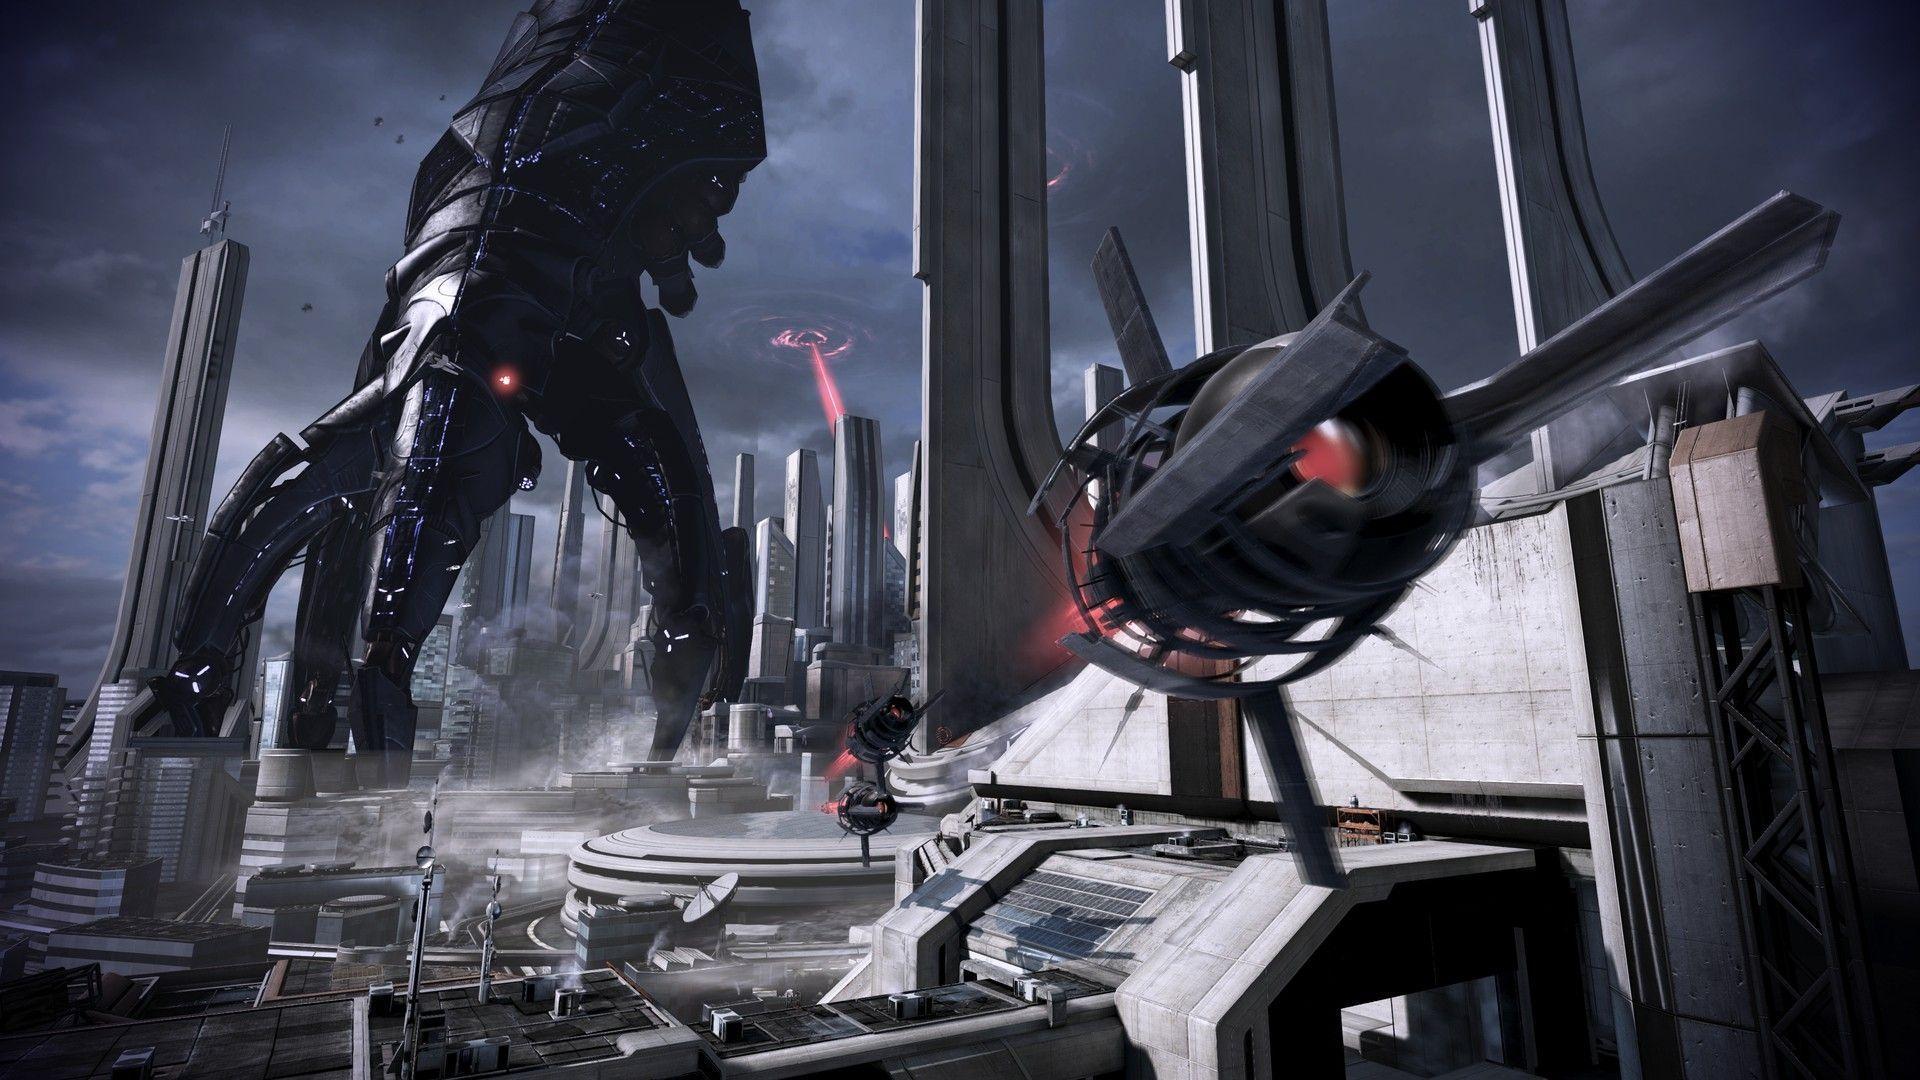 image For > Mass Effect Reaper Wallpaper